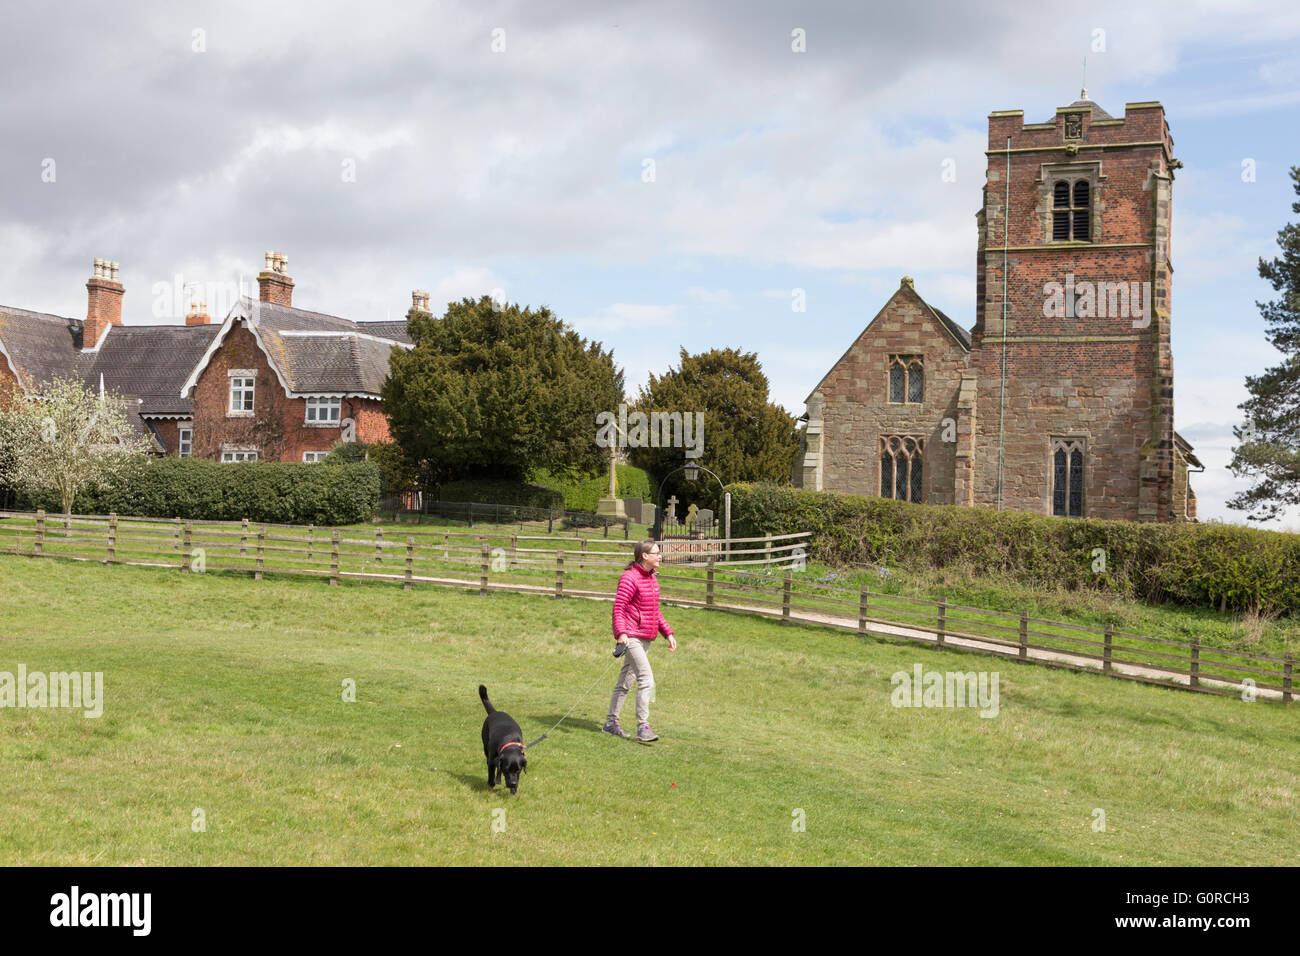 El sitio de Wychnor desierta aldea medieval y St Leonard's Church, Wychnor, Staffordshire, Inglaterra, Reino Unido. Foto de stock